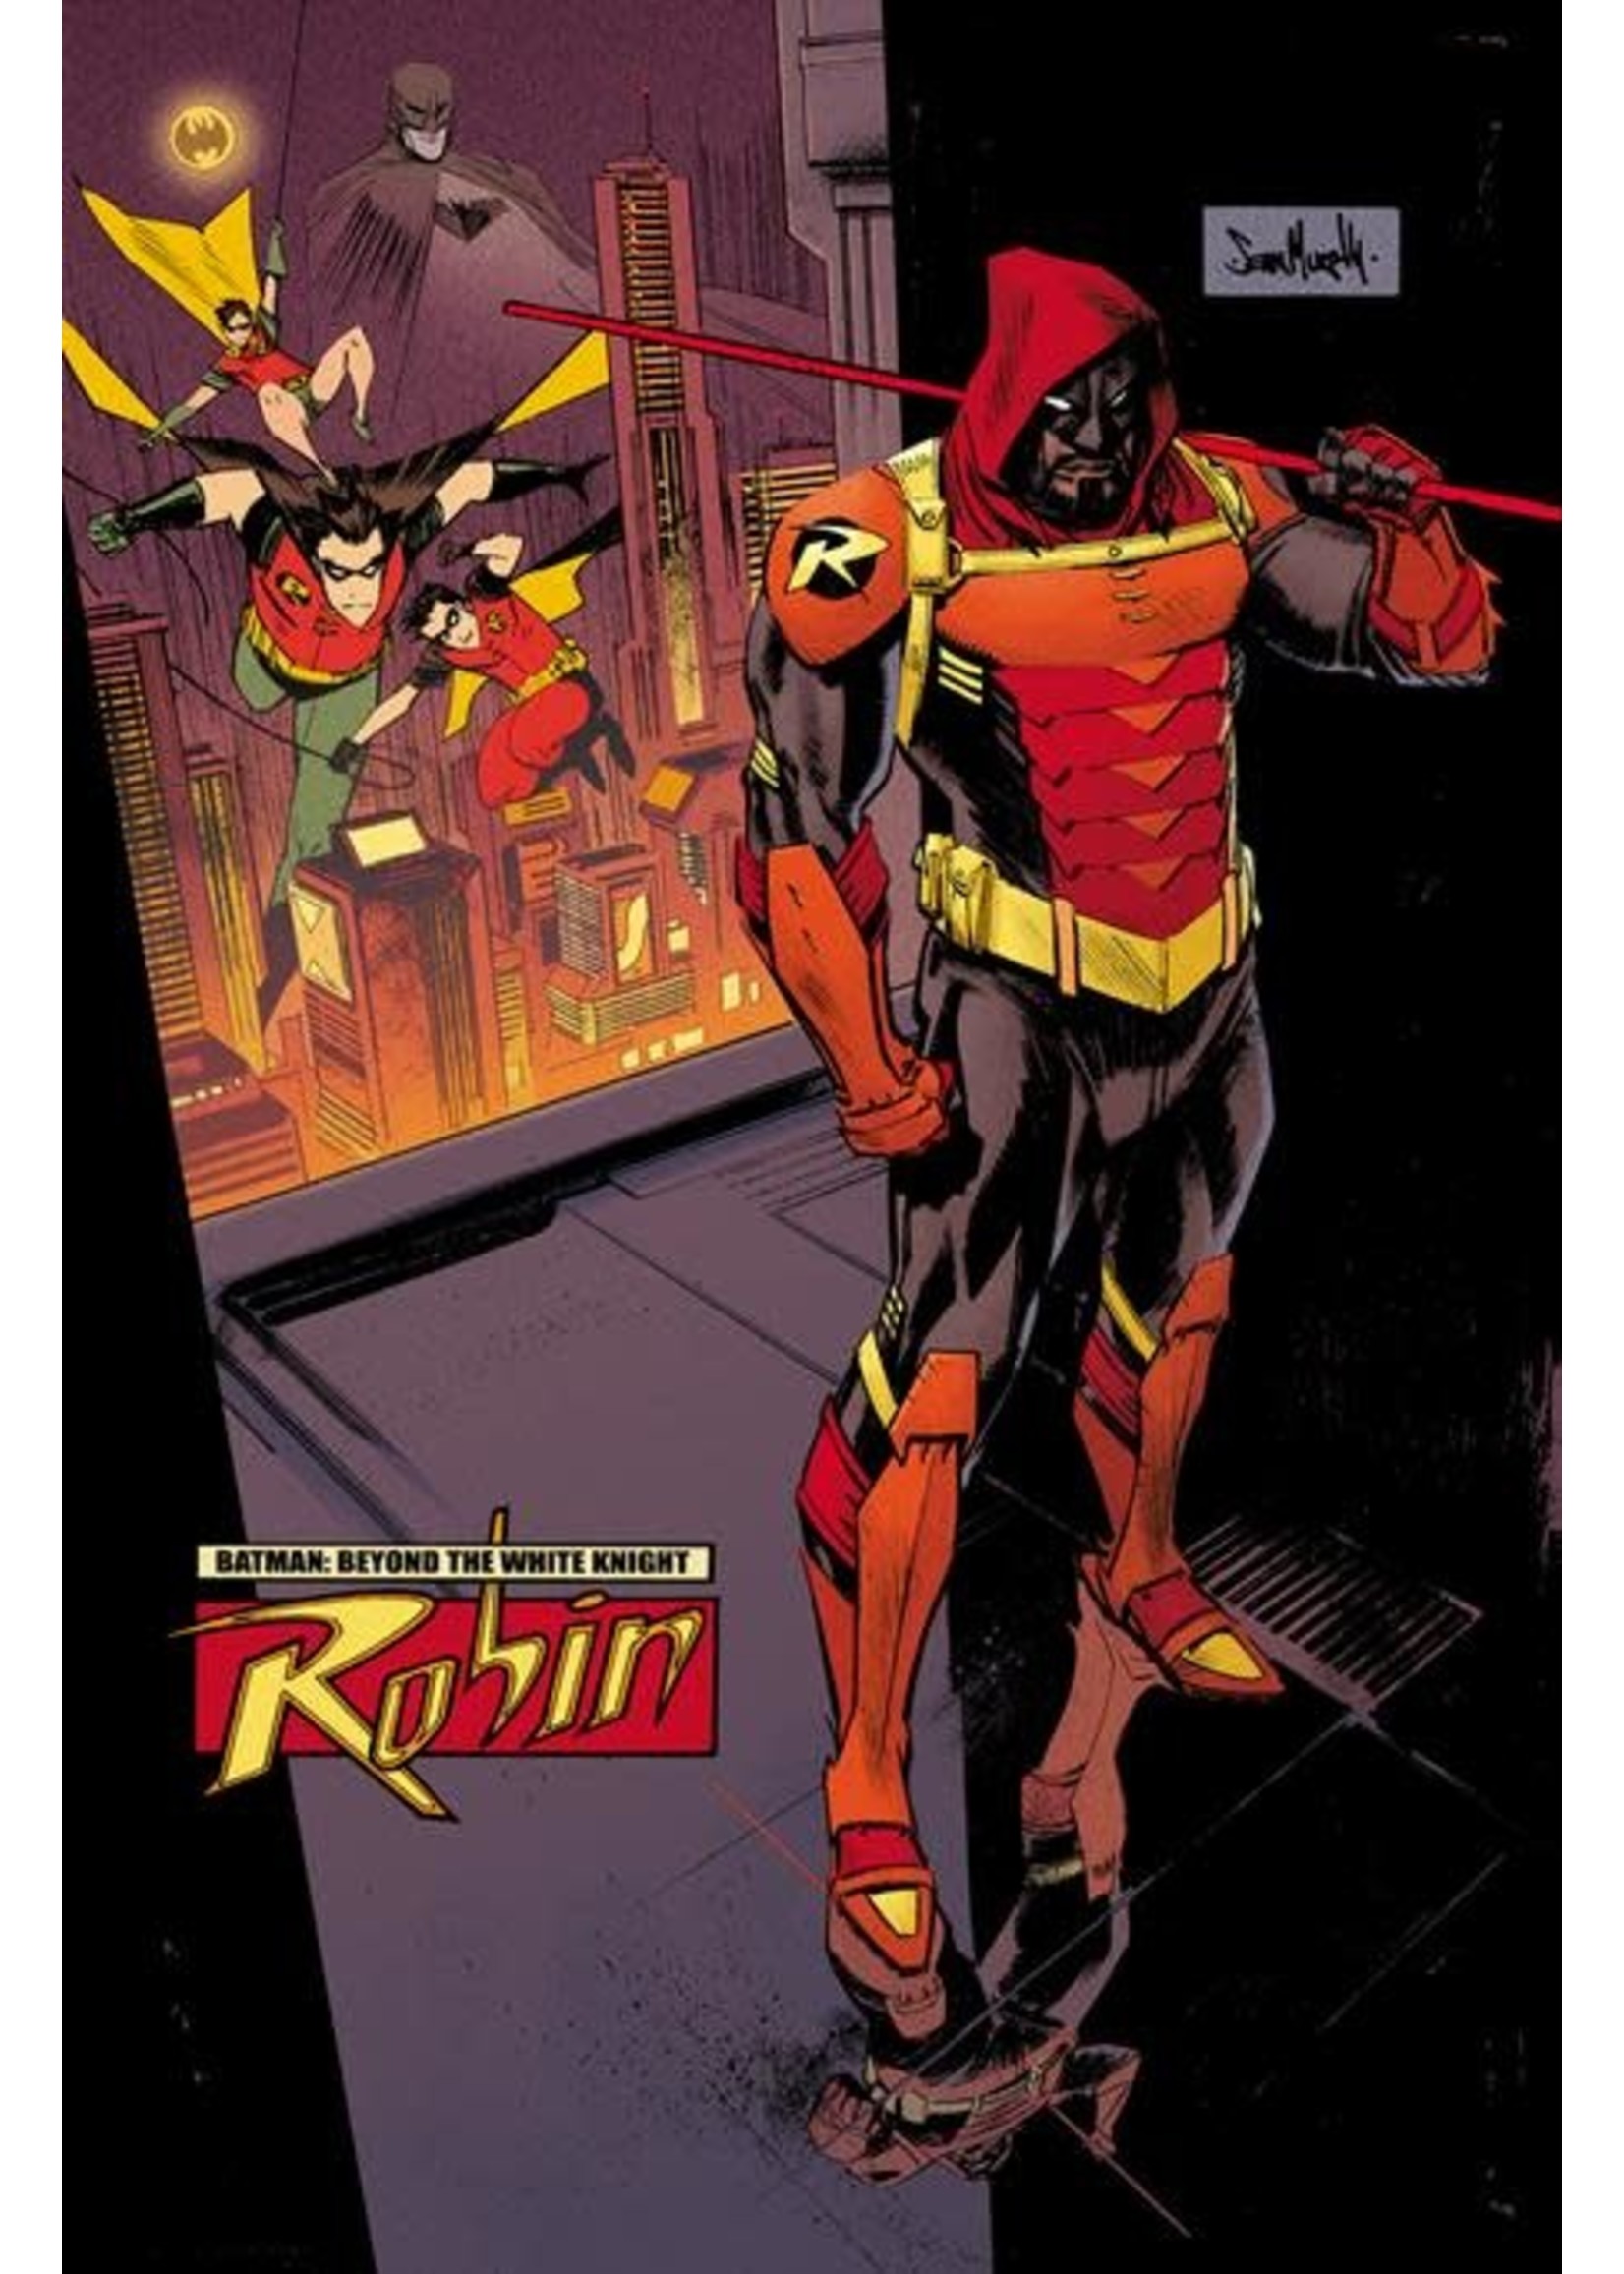 DC COMICS BATMAN BEYOND THE WHITE KNIGHT #4 CVR B